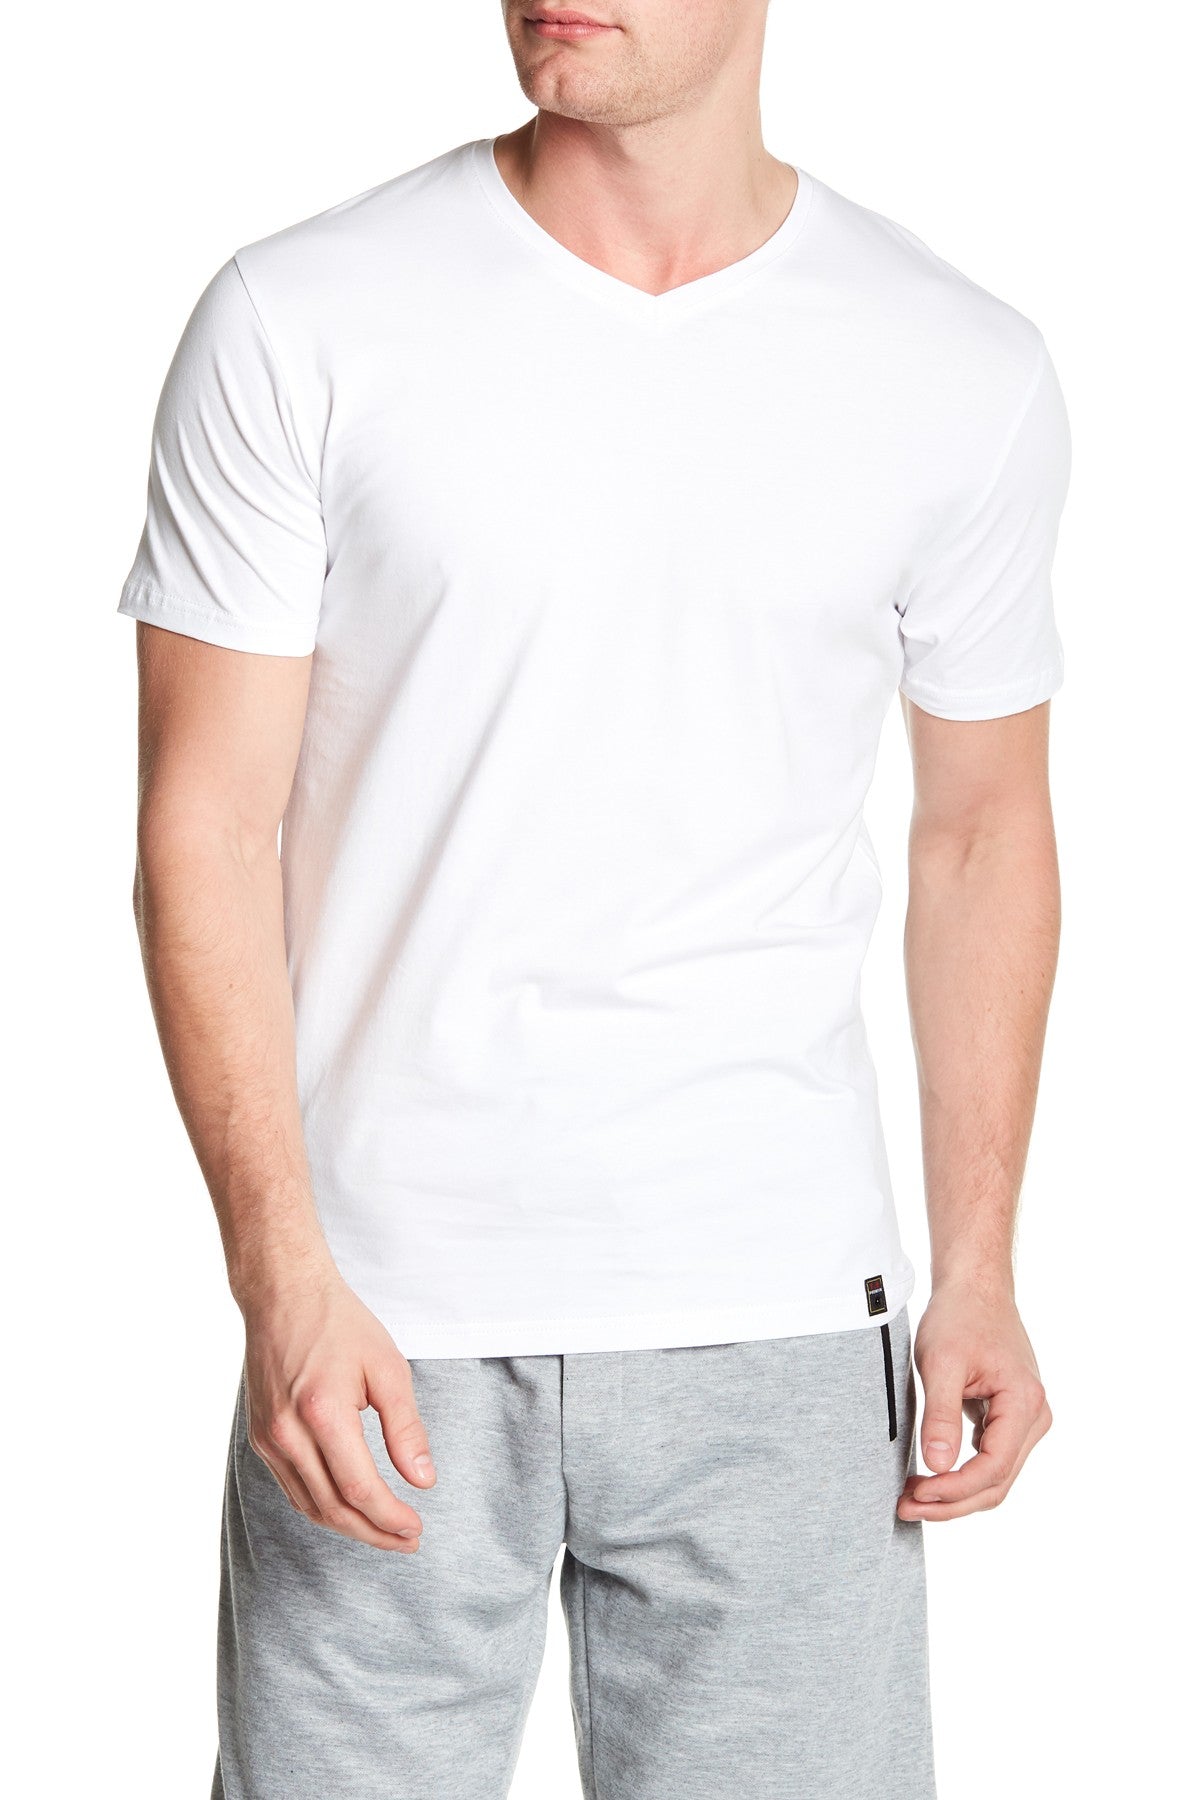 V-Neck Men's Solid T-Shirt – TRPremium